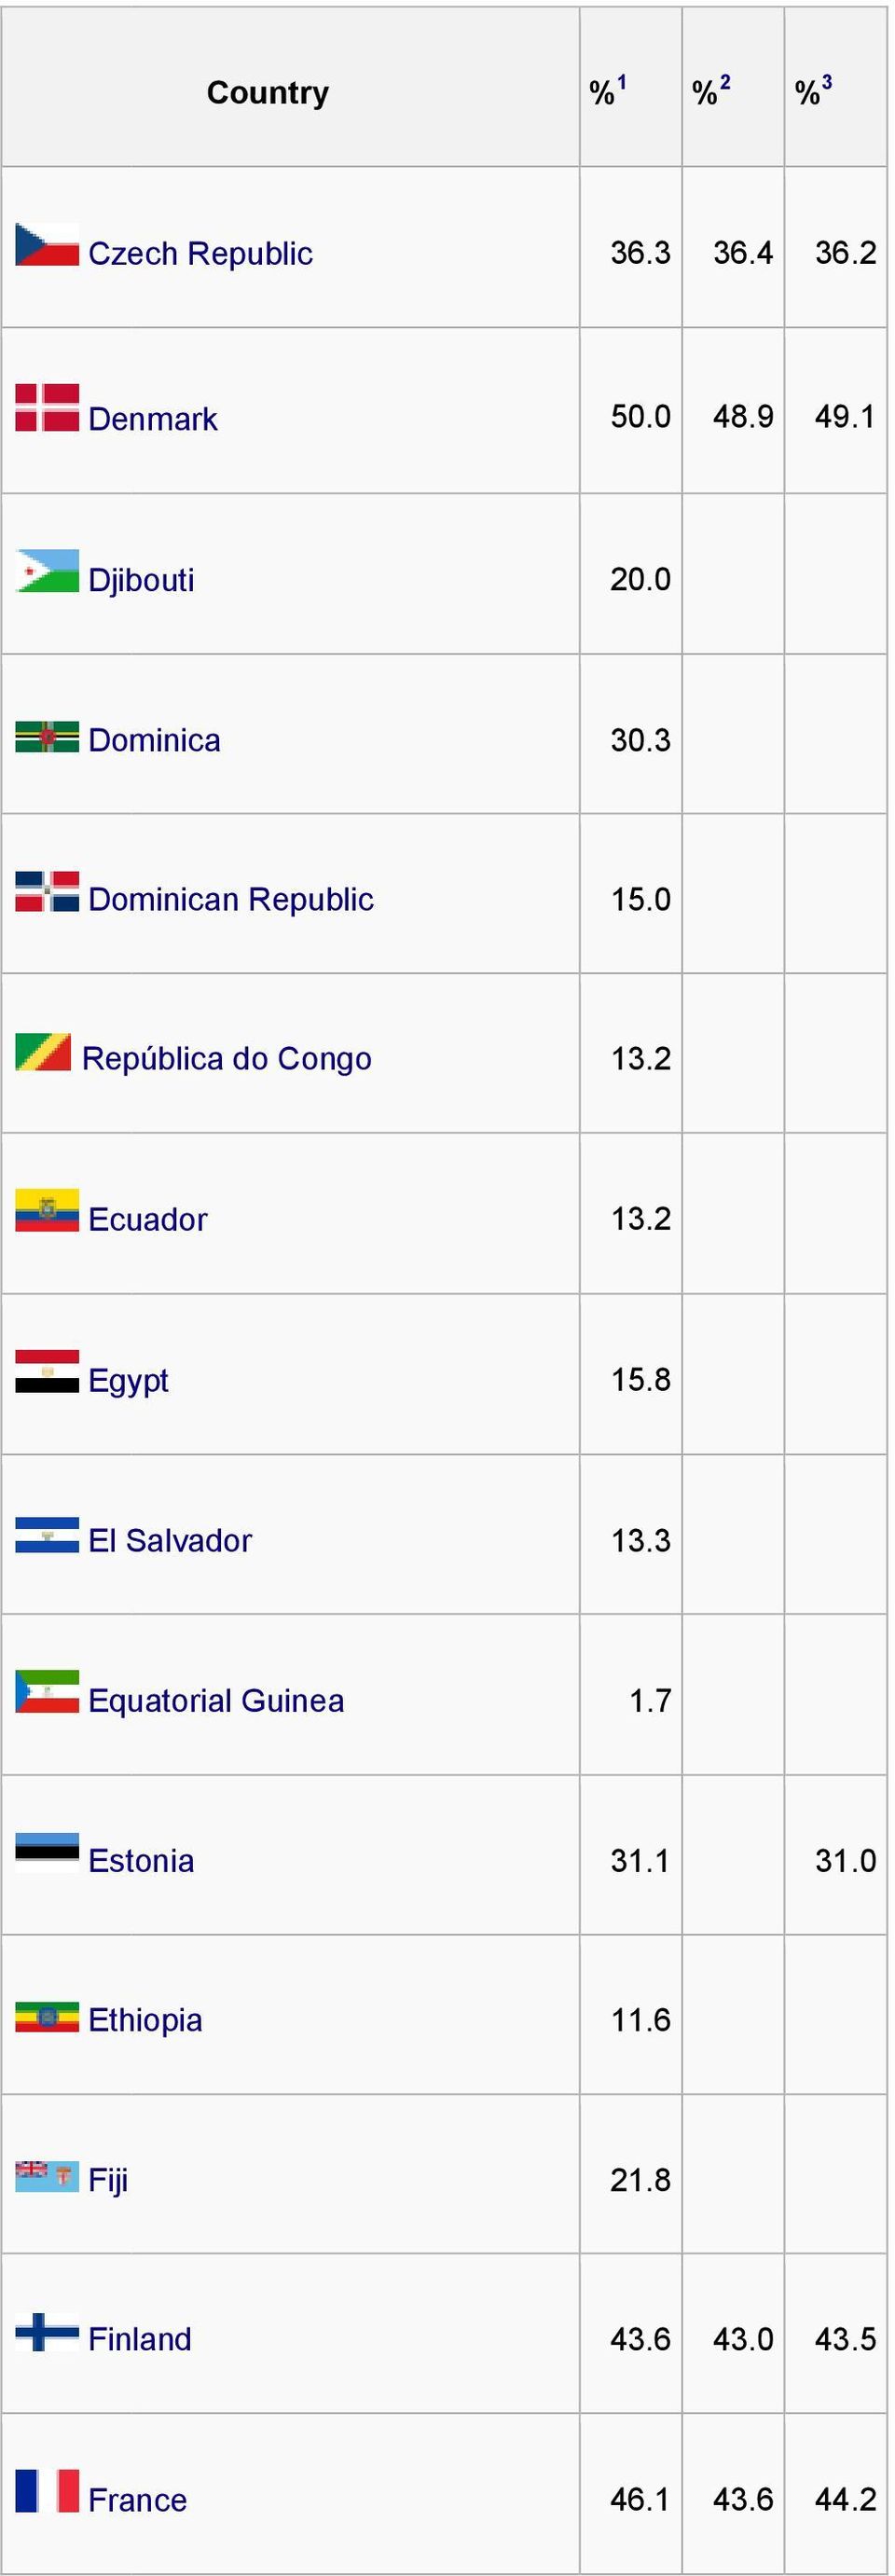 0 República do Congo 13.2 Ecuador 13.2 Egypt 15.8 El Salvador 13.